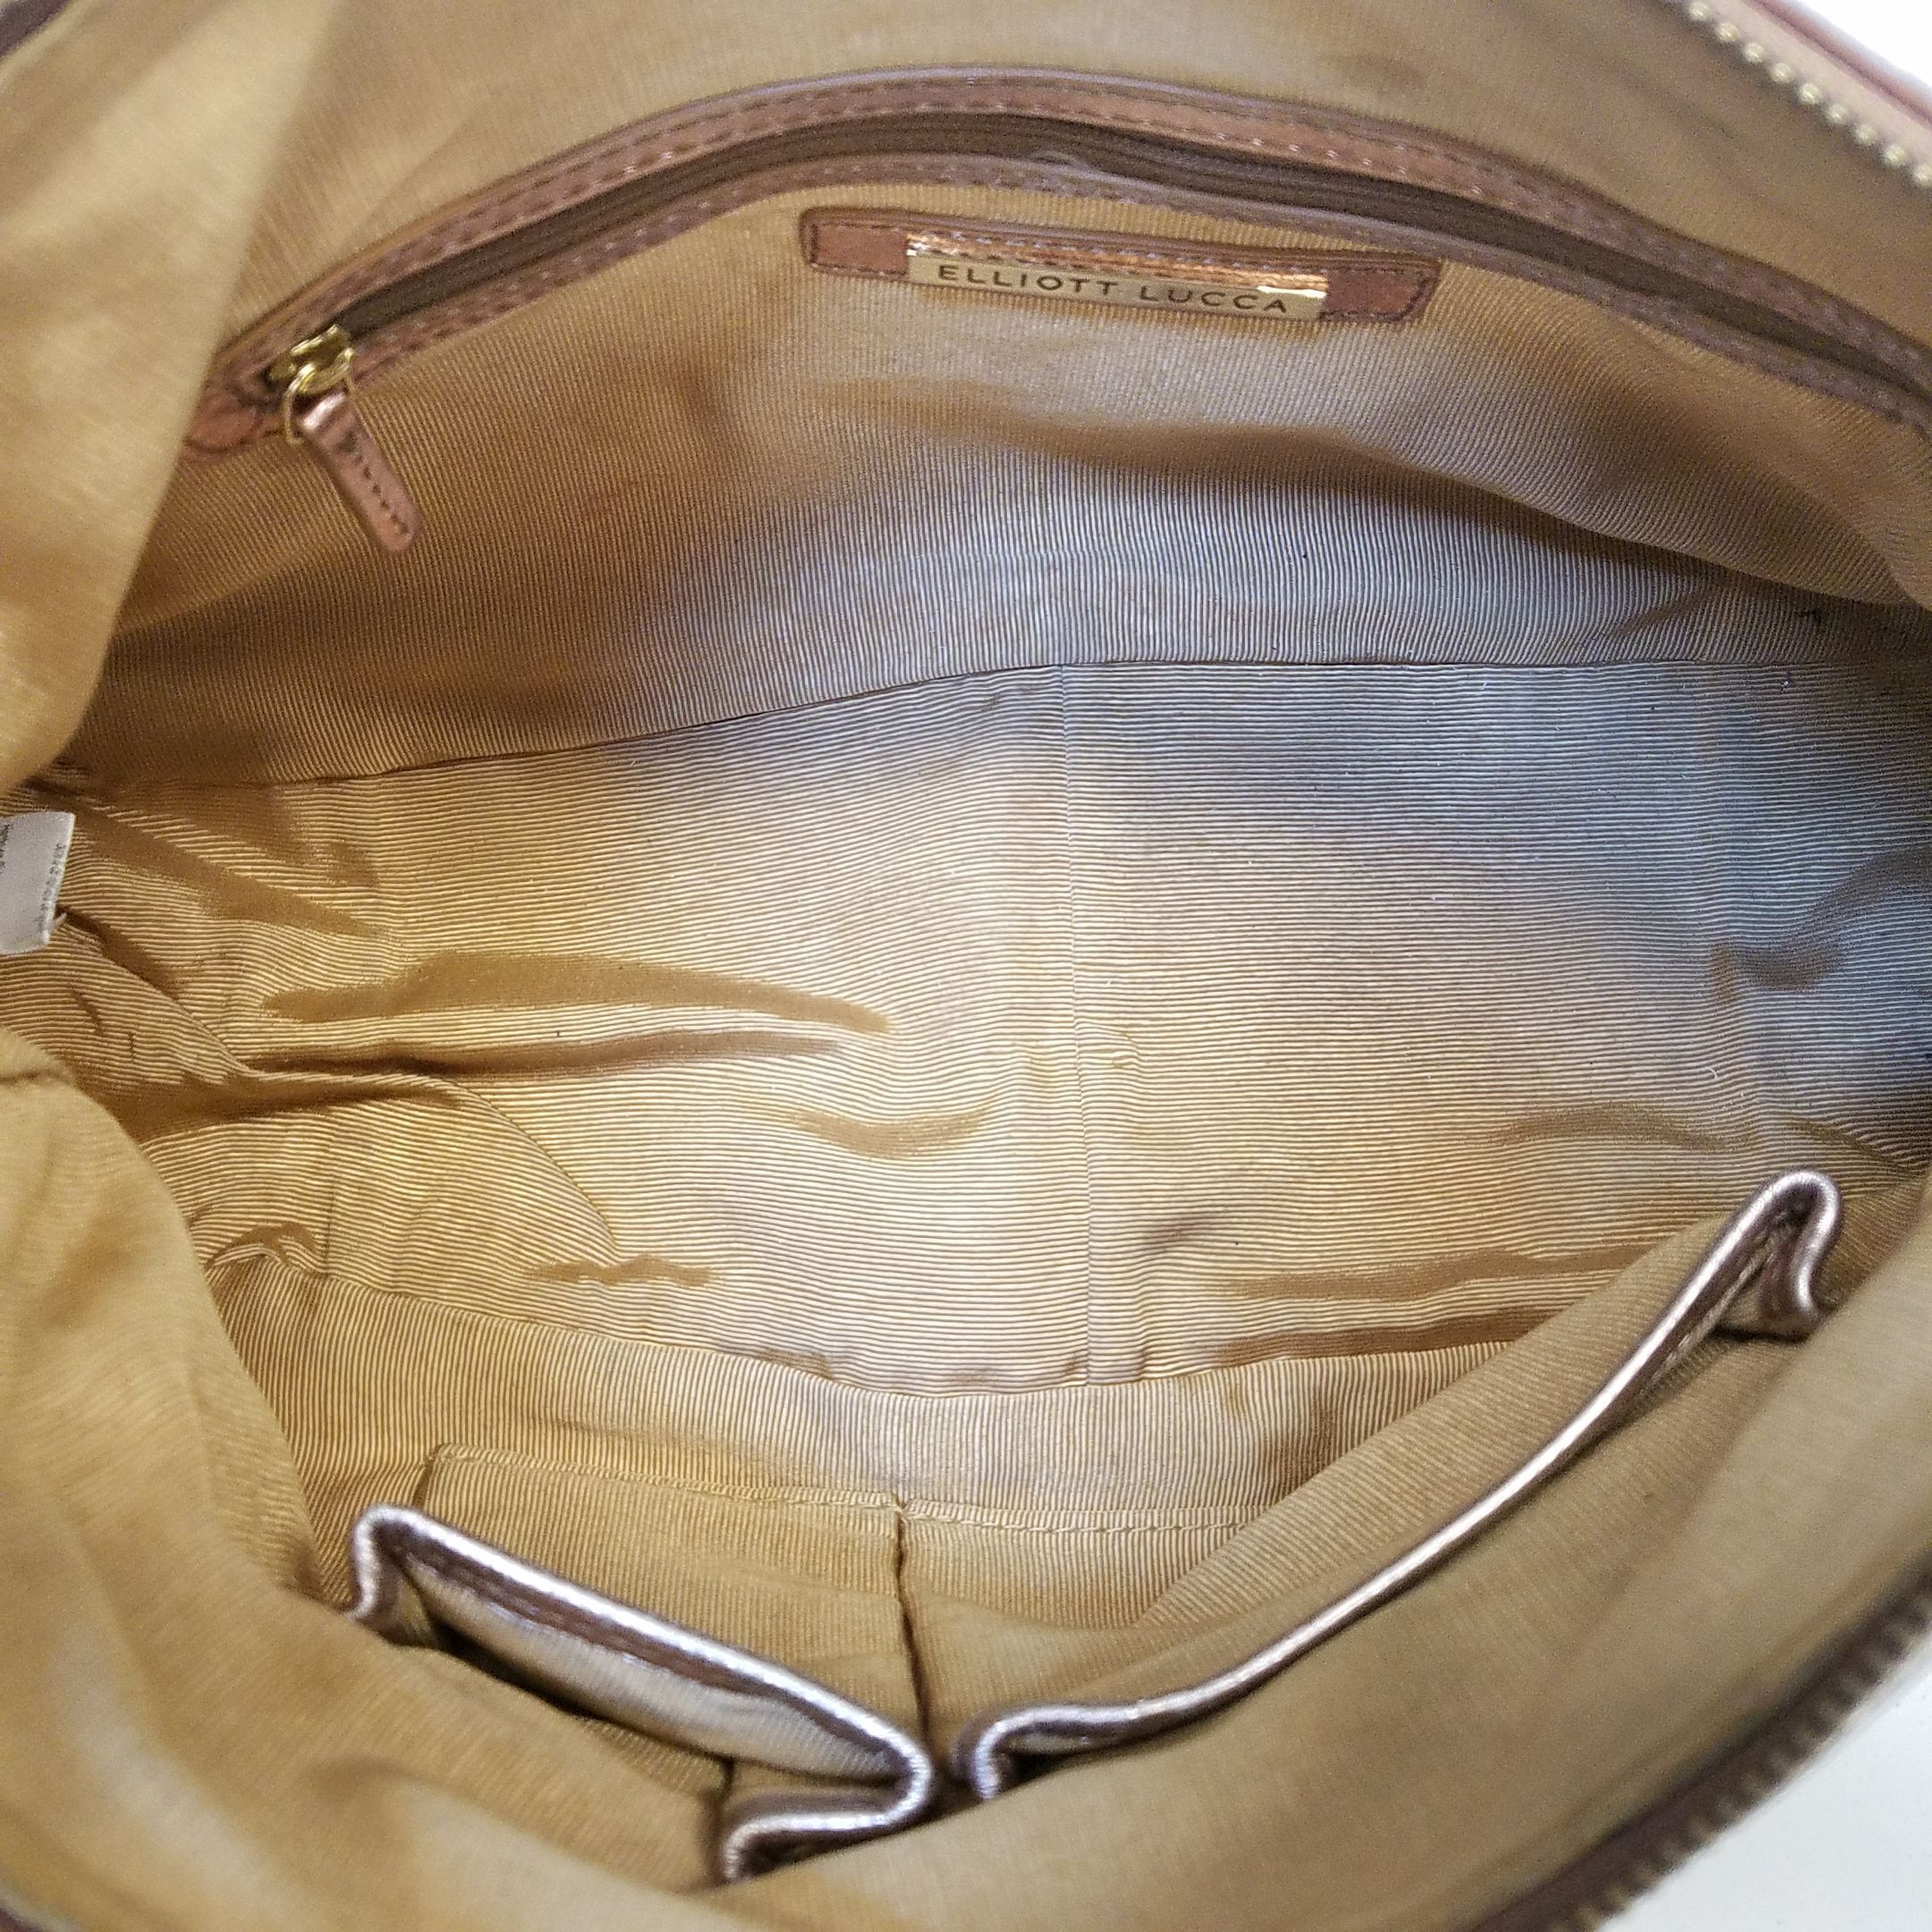 Elliott Lucca Grey Crossbody Bags for Women | Mercari